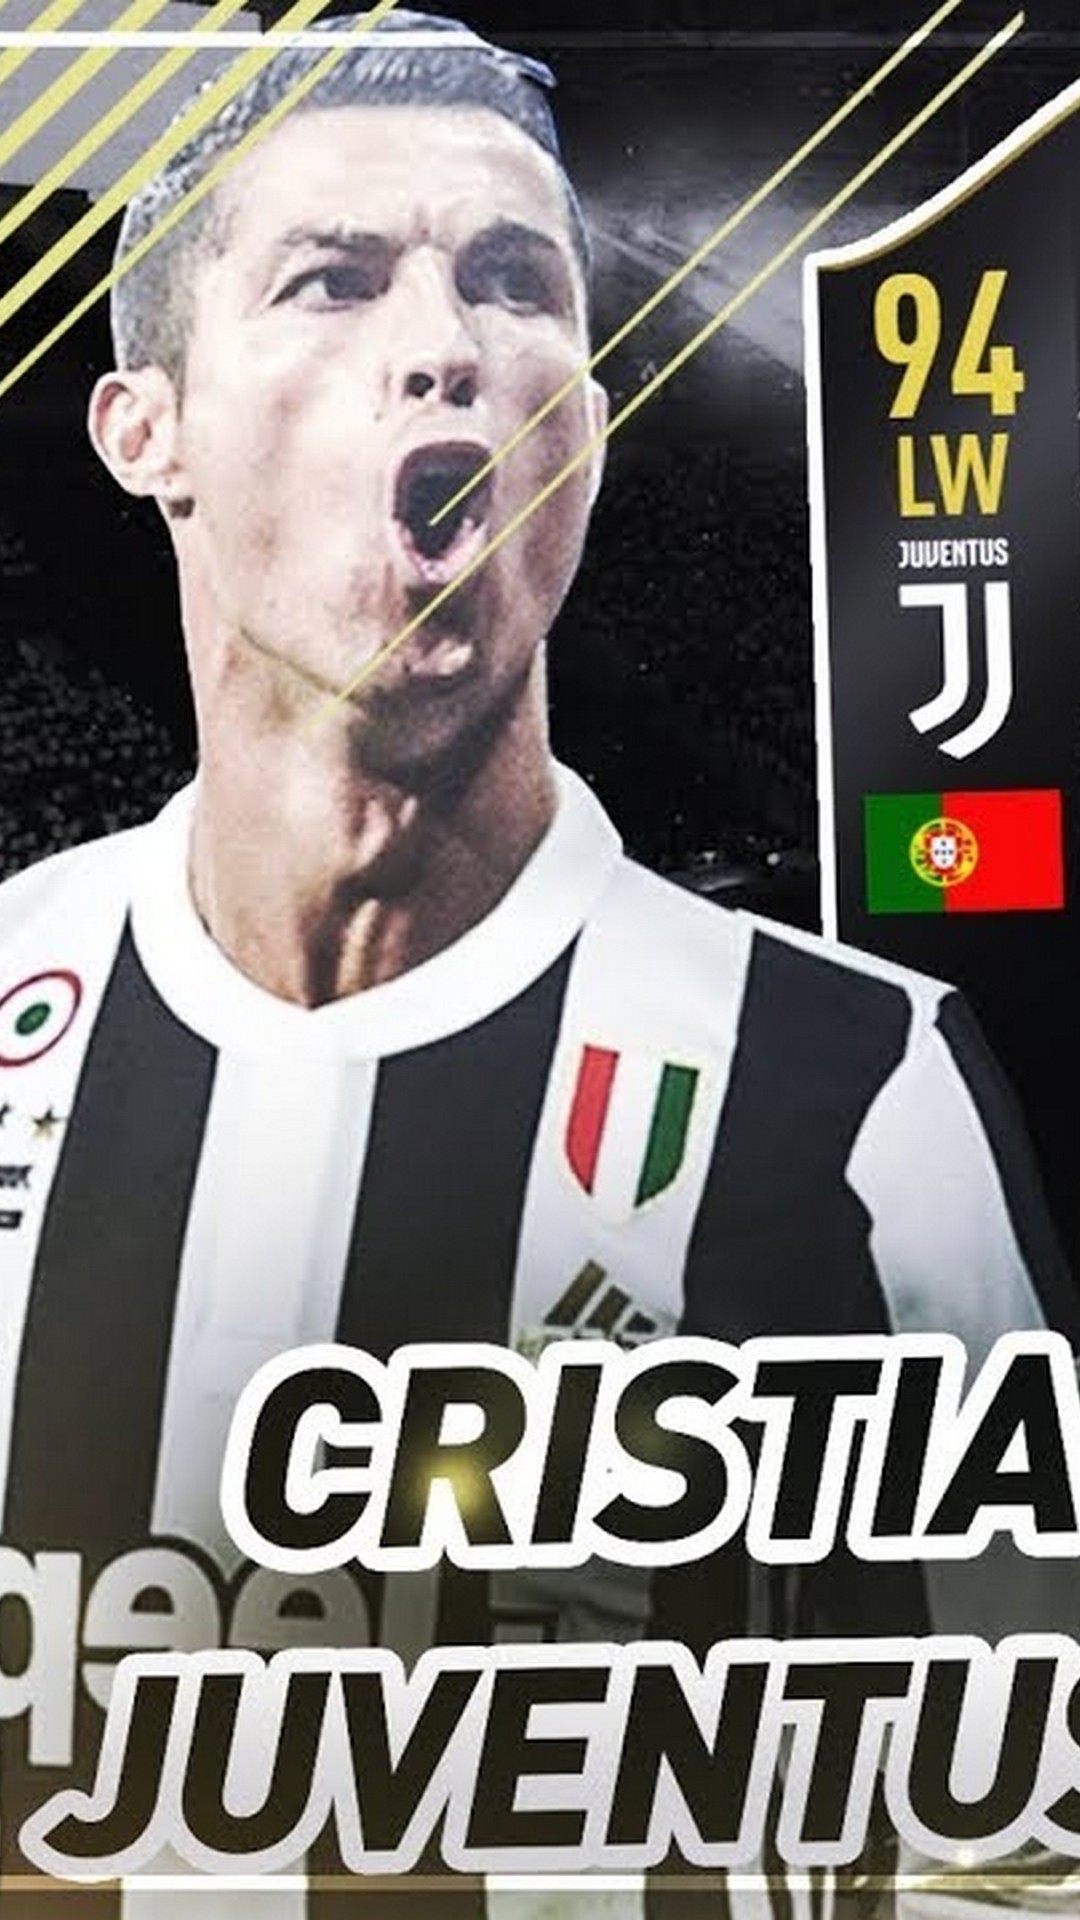 Cristiano Ronaldo Juventus Wallpaper For Android